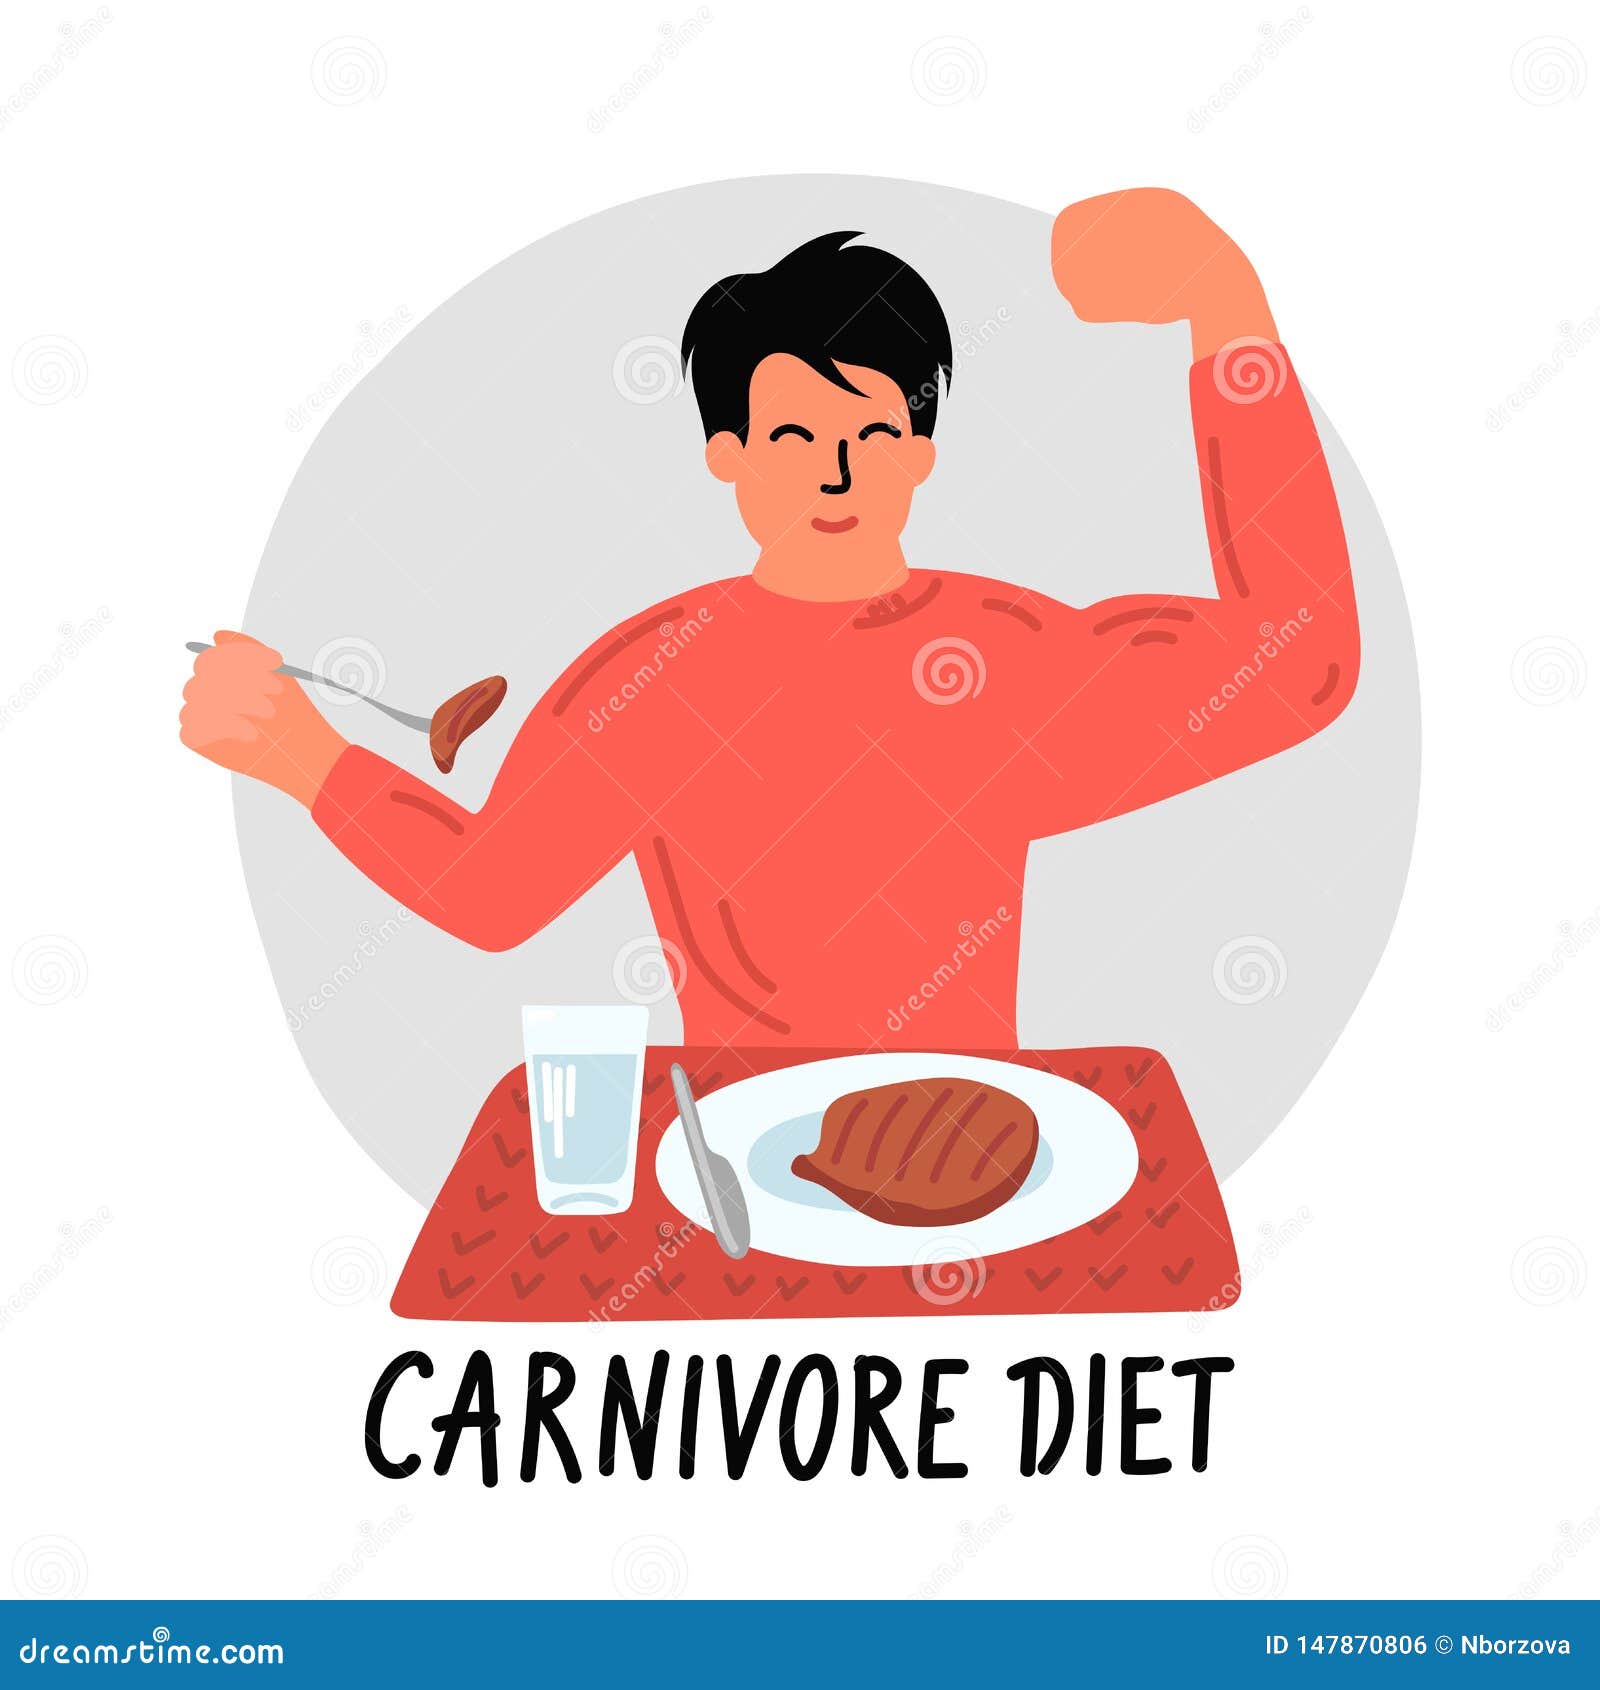 carnivore diet. man eating meat.